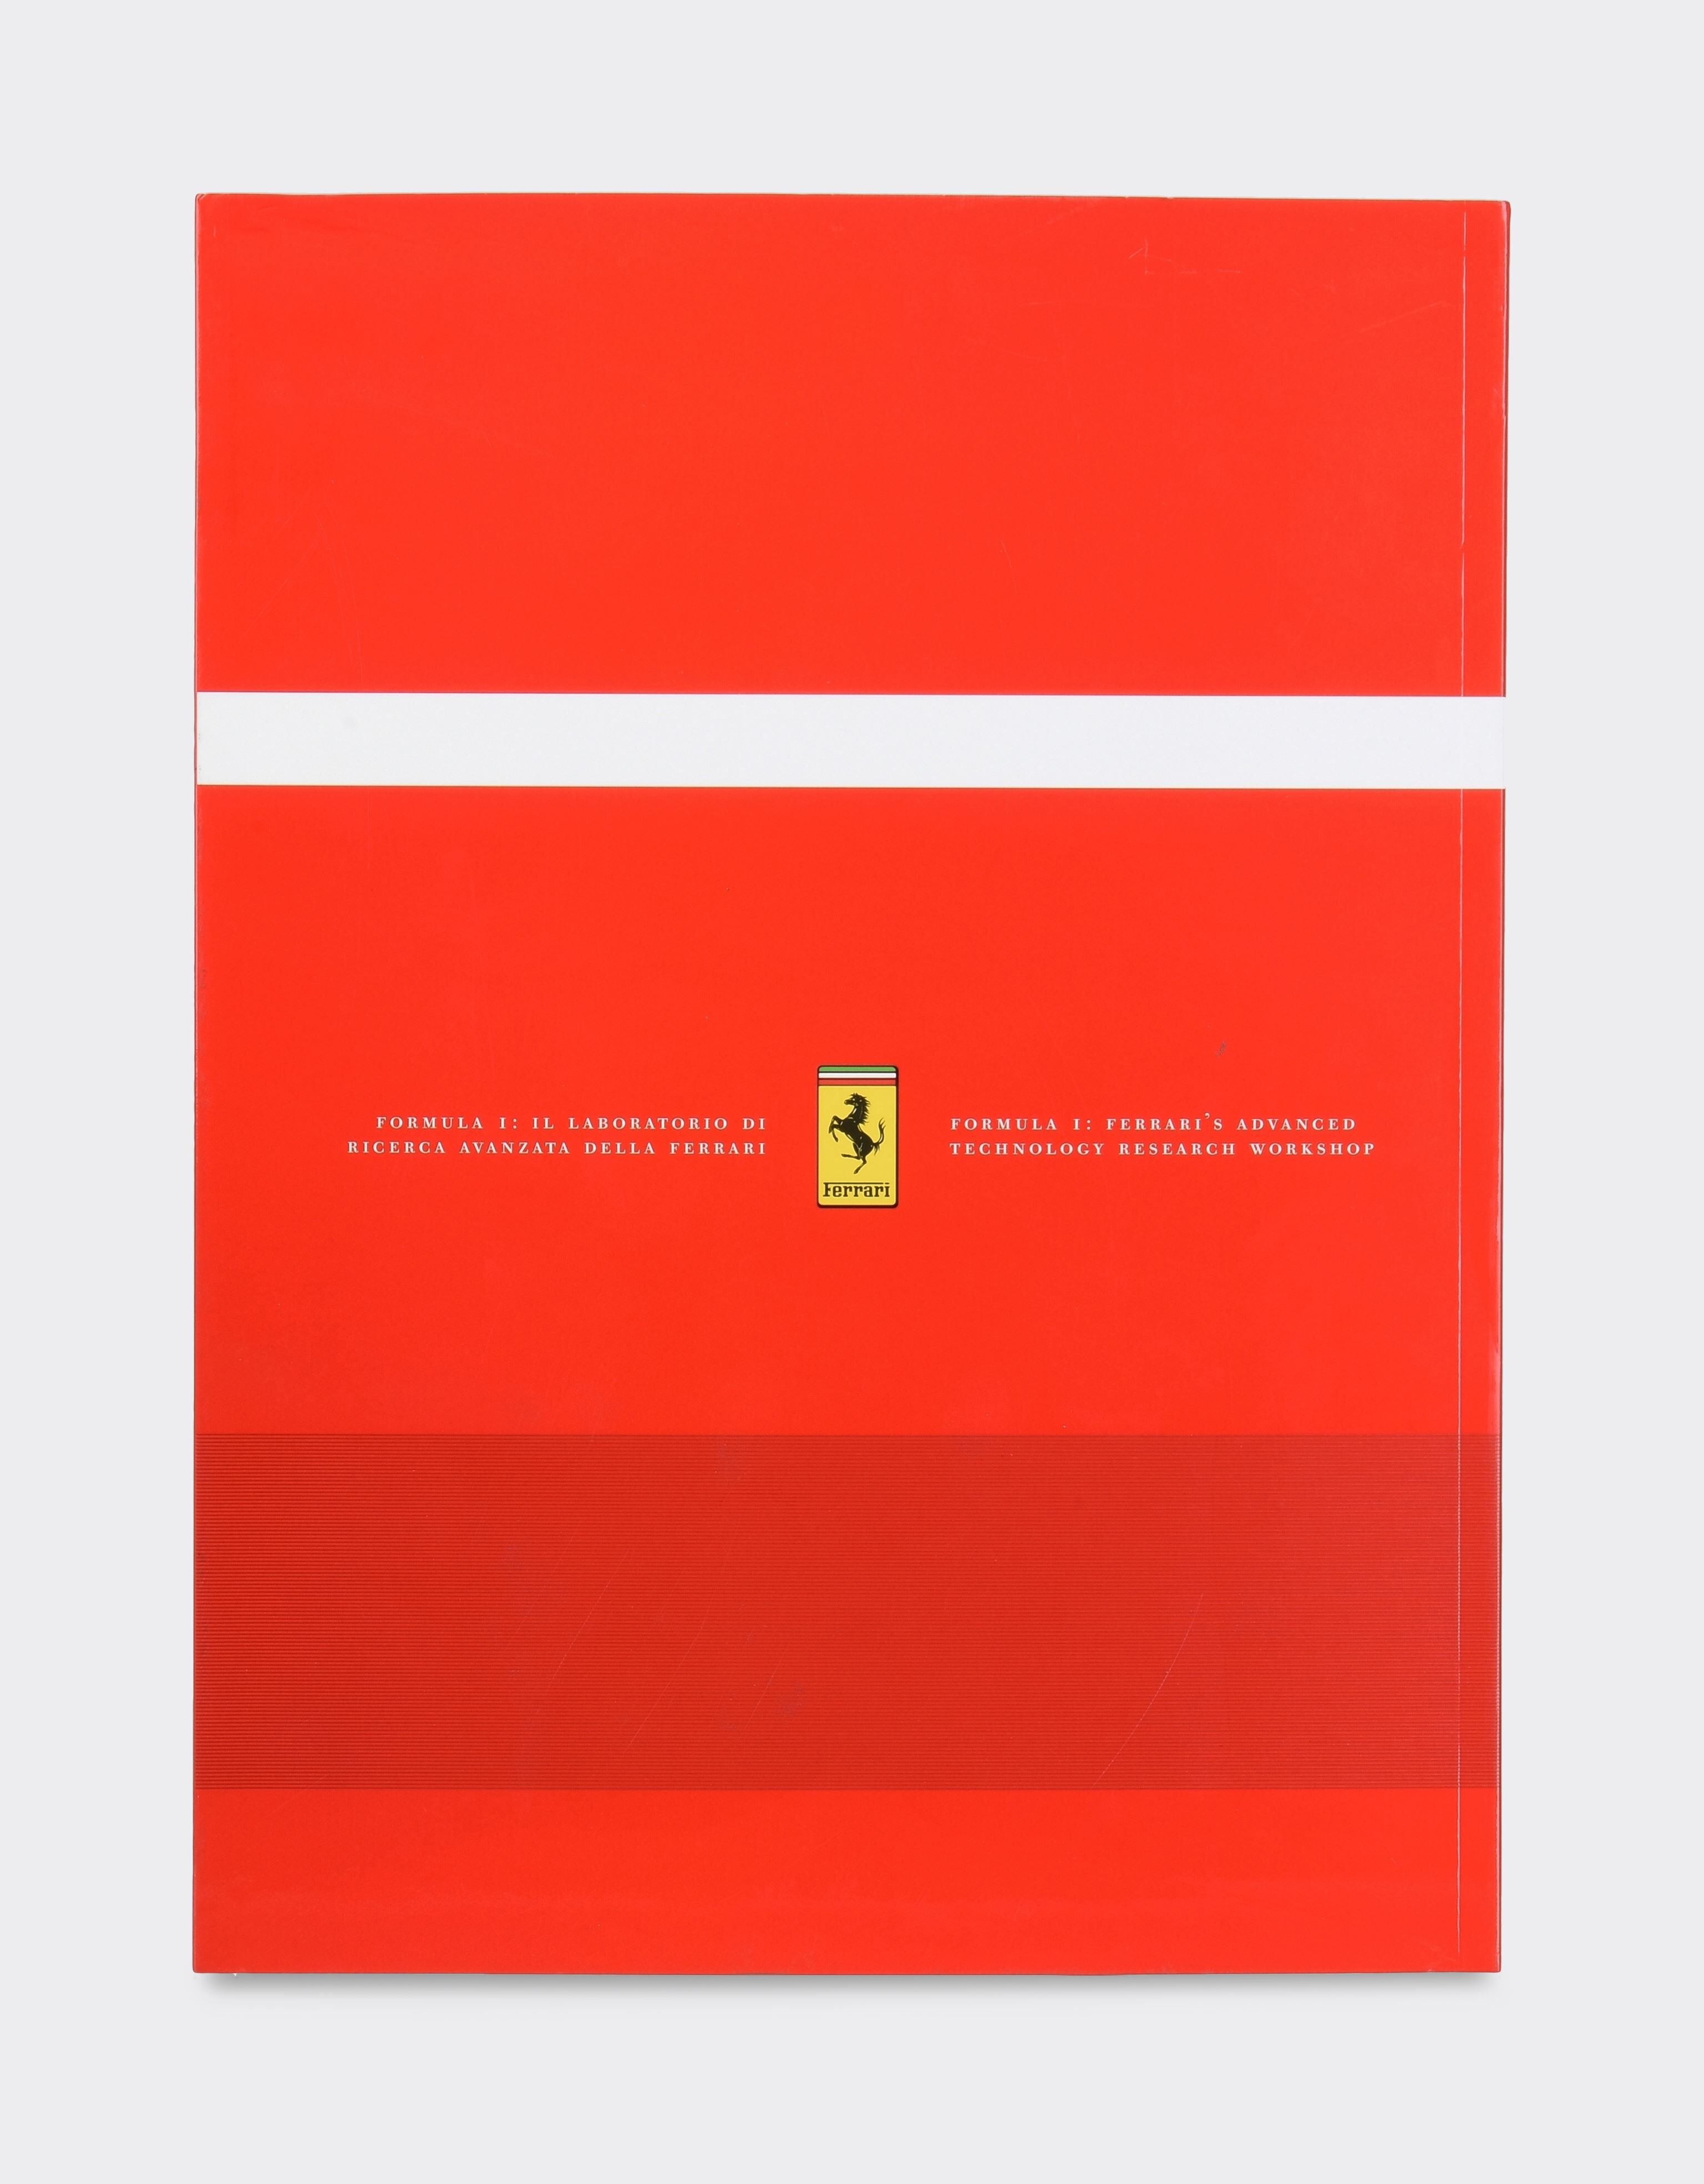 Ferrari Ferrari年鑑 2001 マルチカラー 00619f